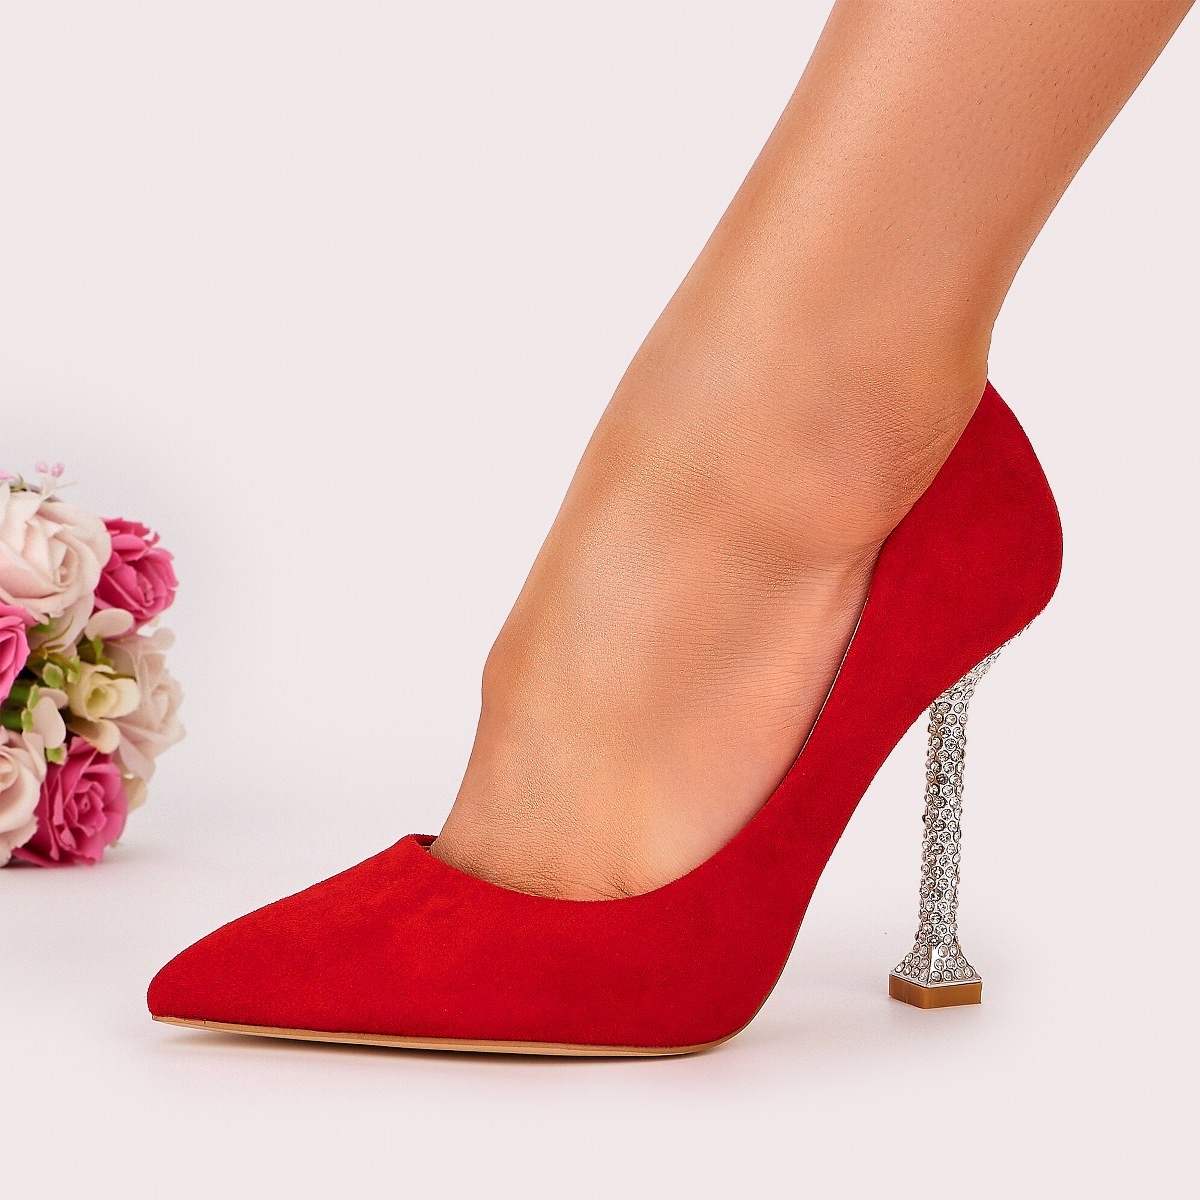 Pantofi Stiletto Dama Rosii Cu Toc Flame